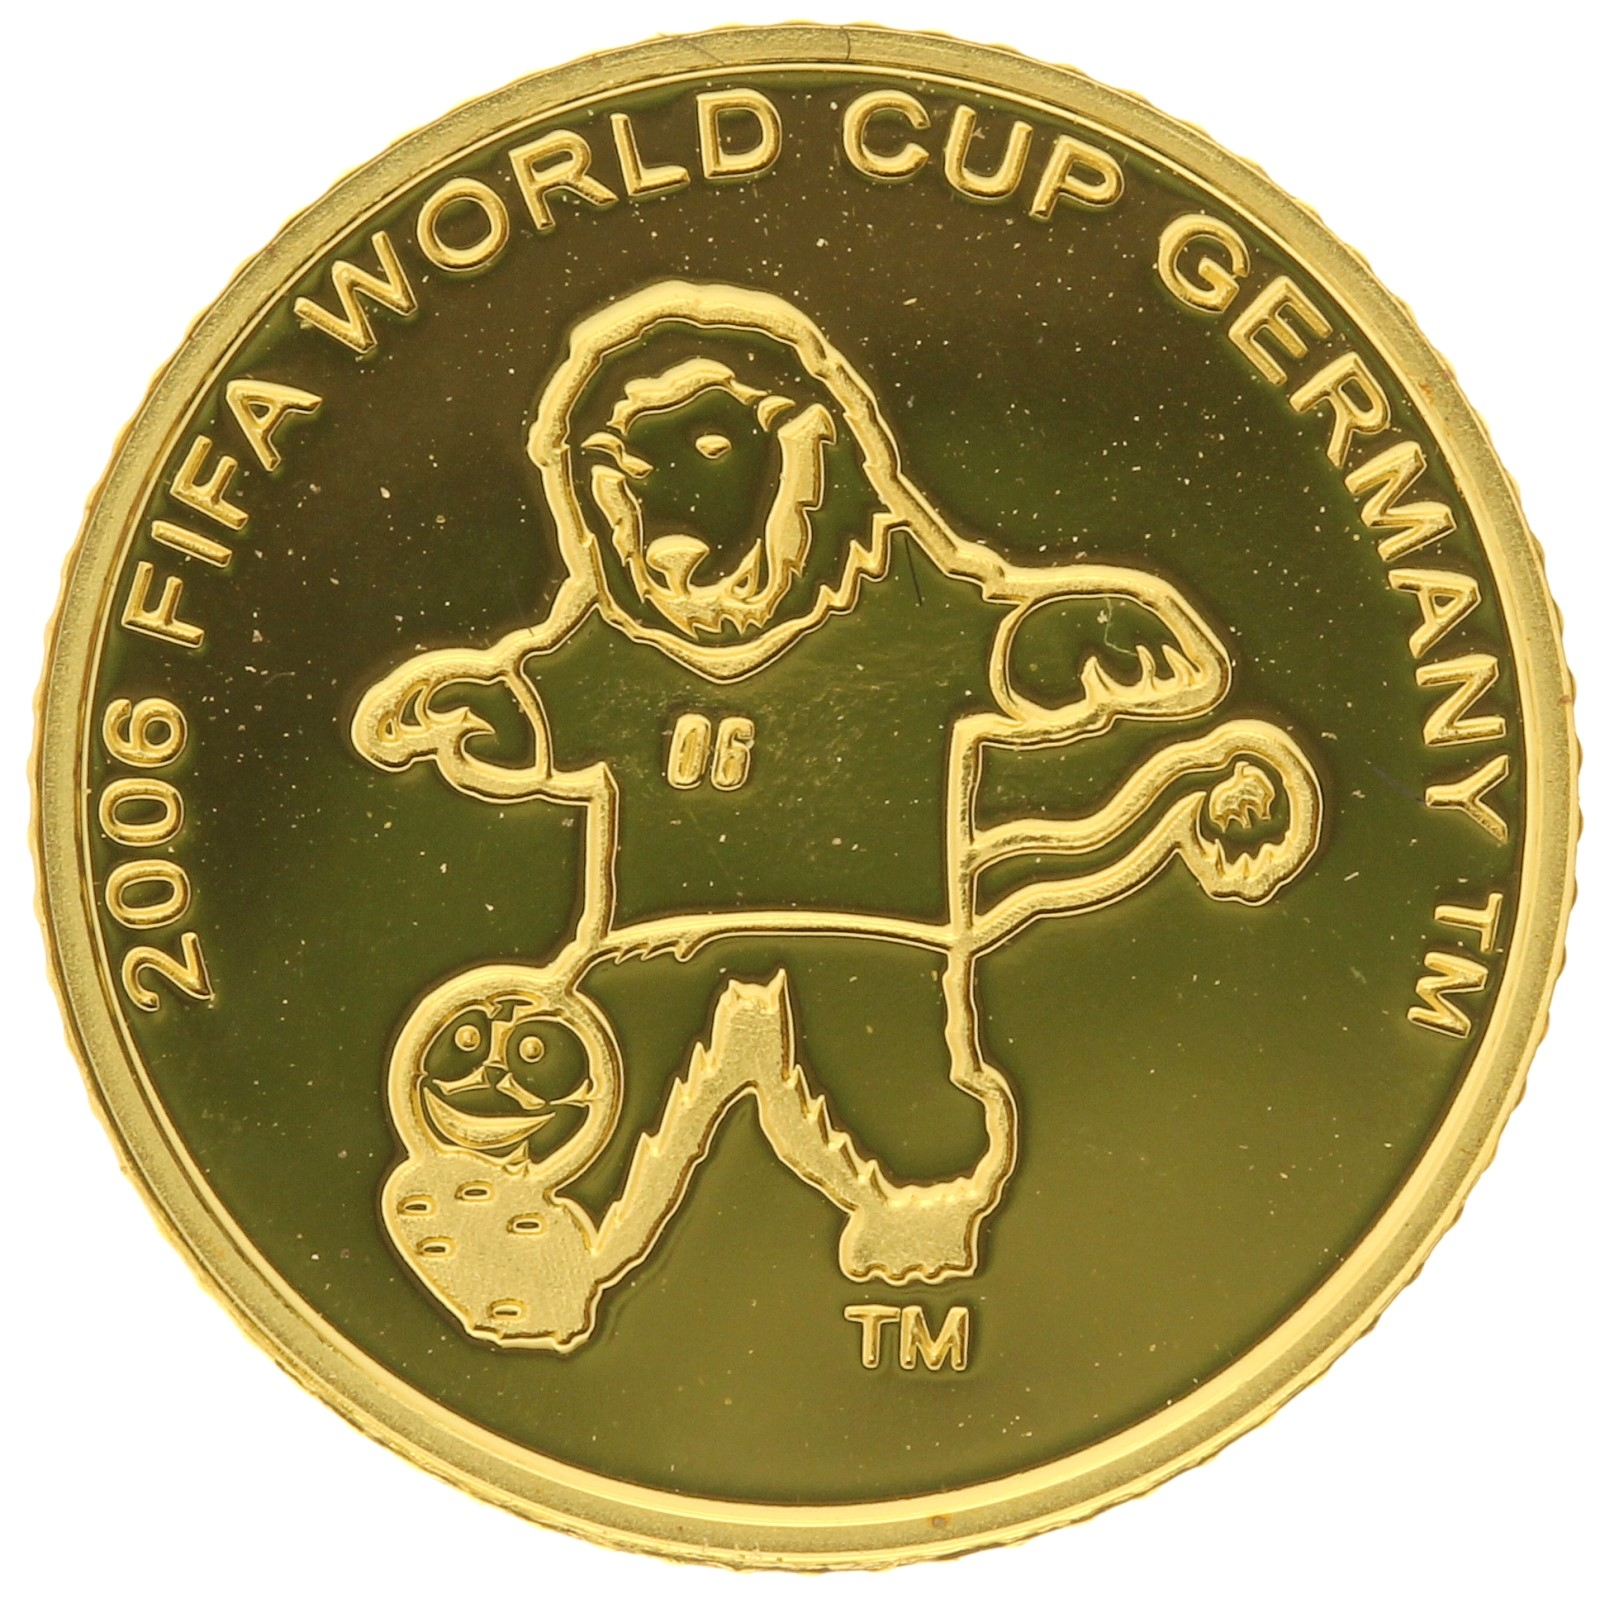 Congo - 20 francs - 2006 -  World Cup - 1/25oz